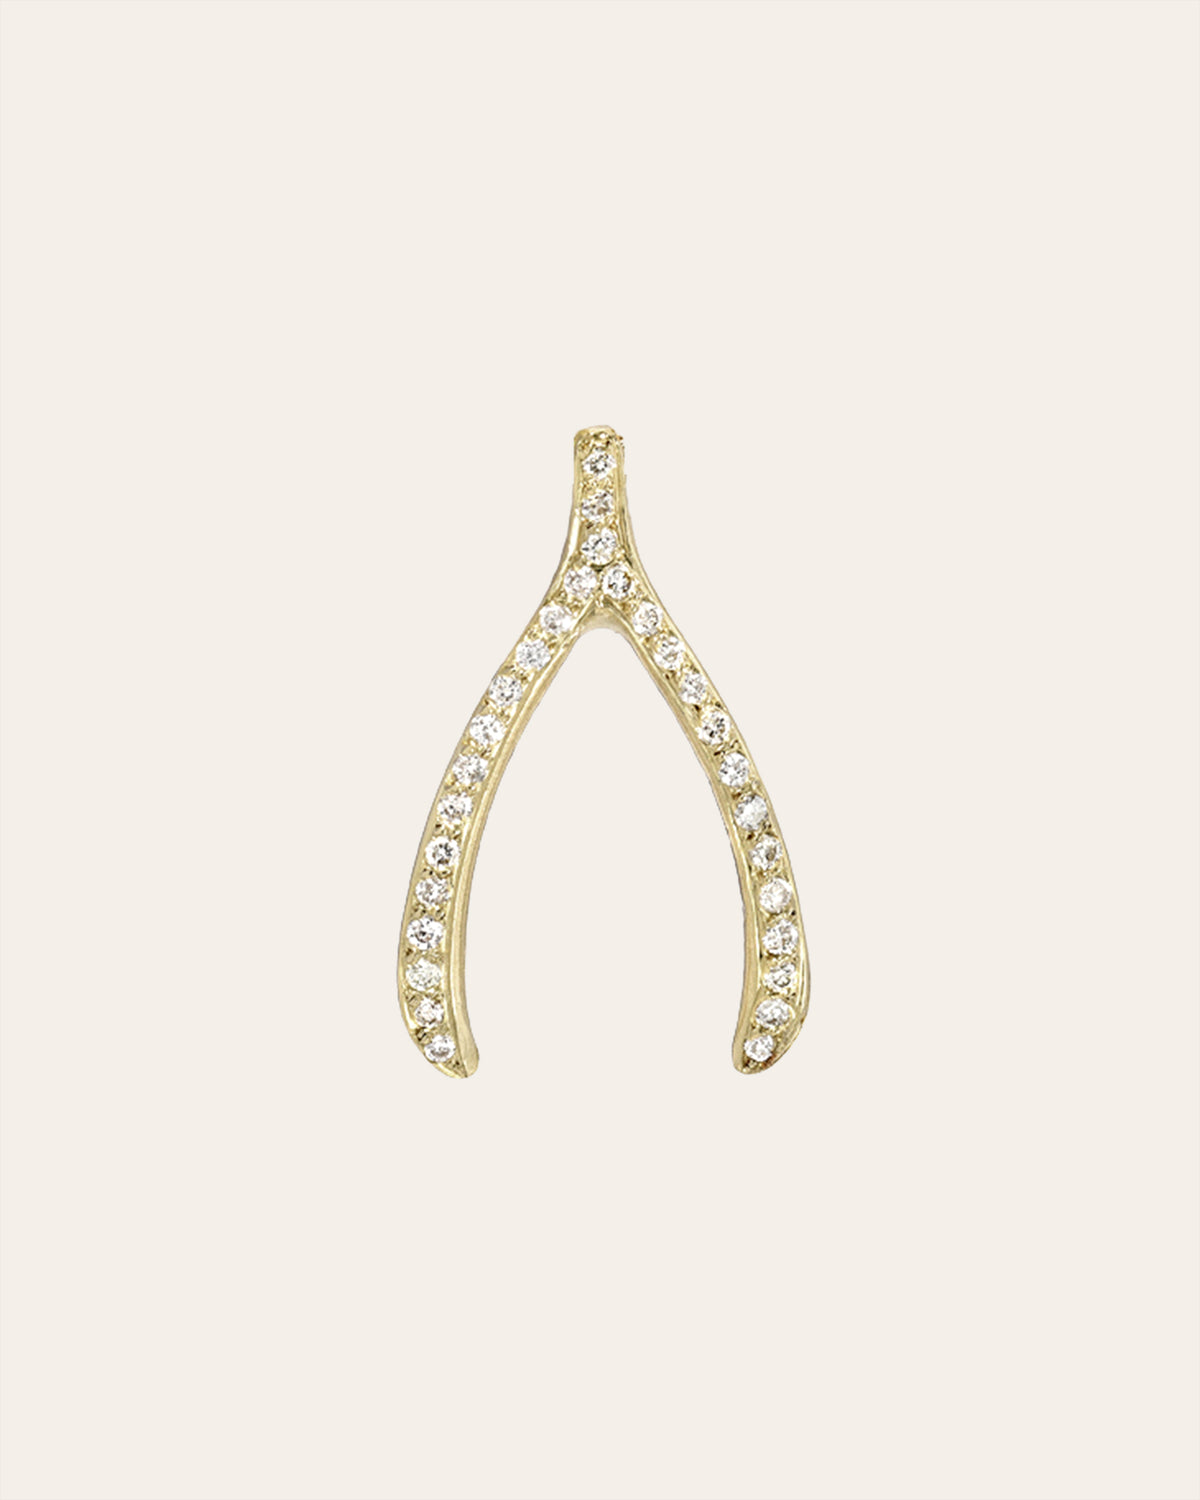 Diamond Wishbone Pendant